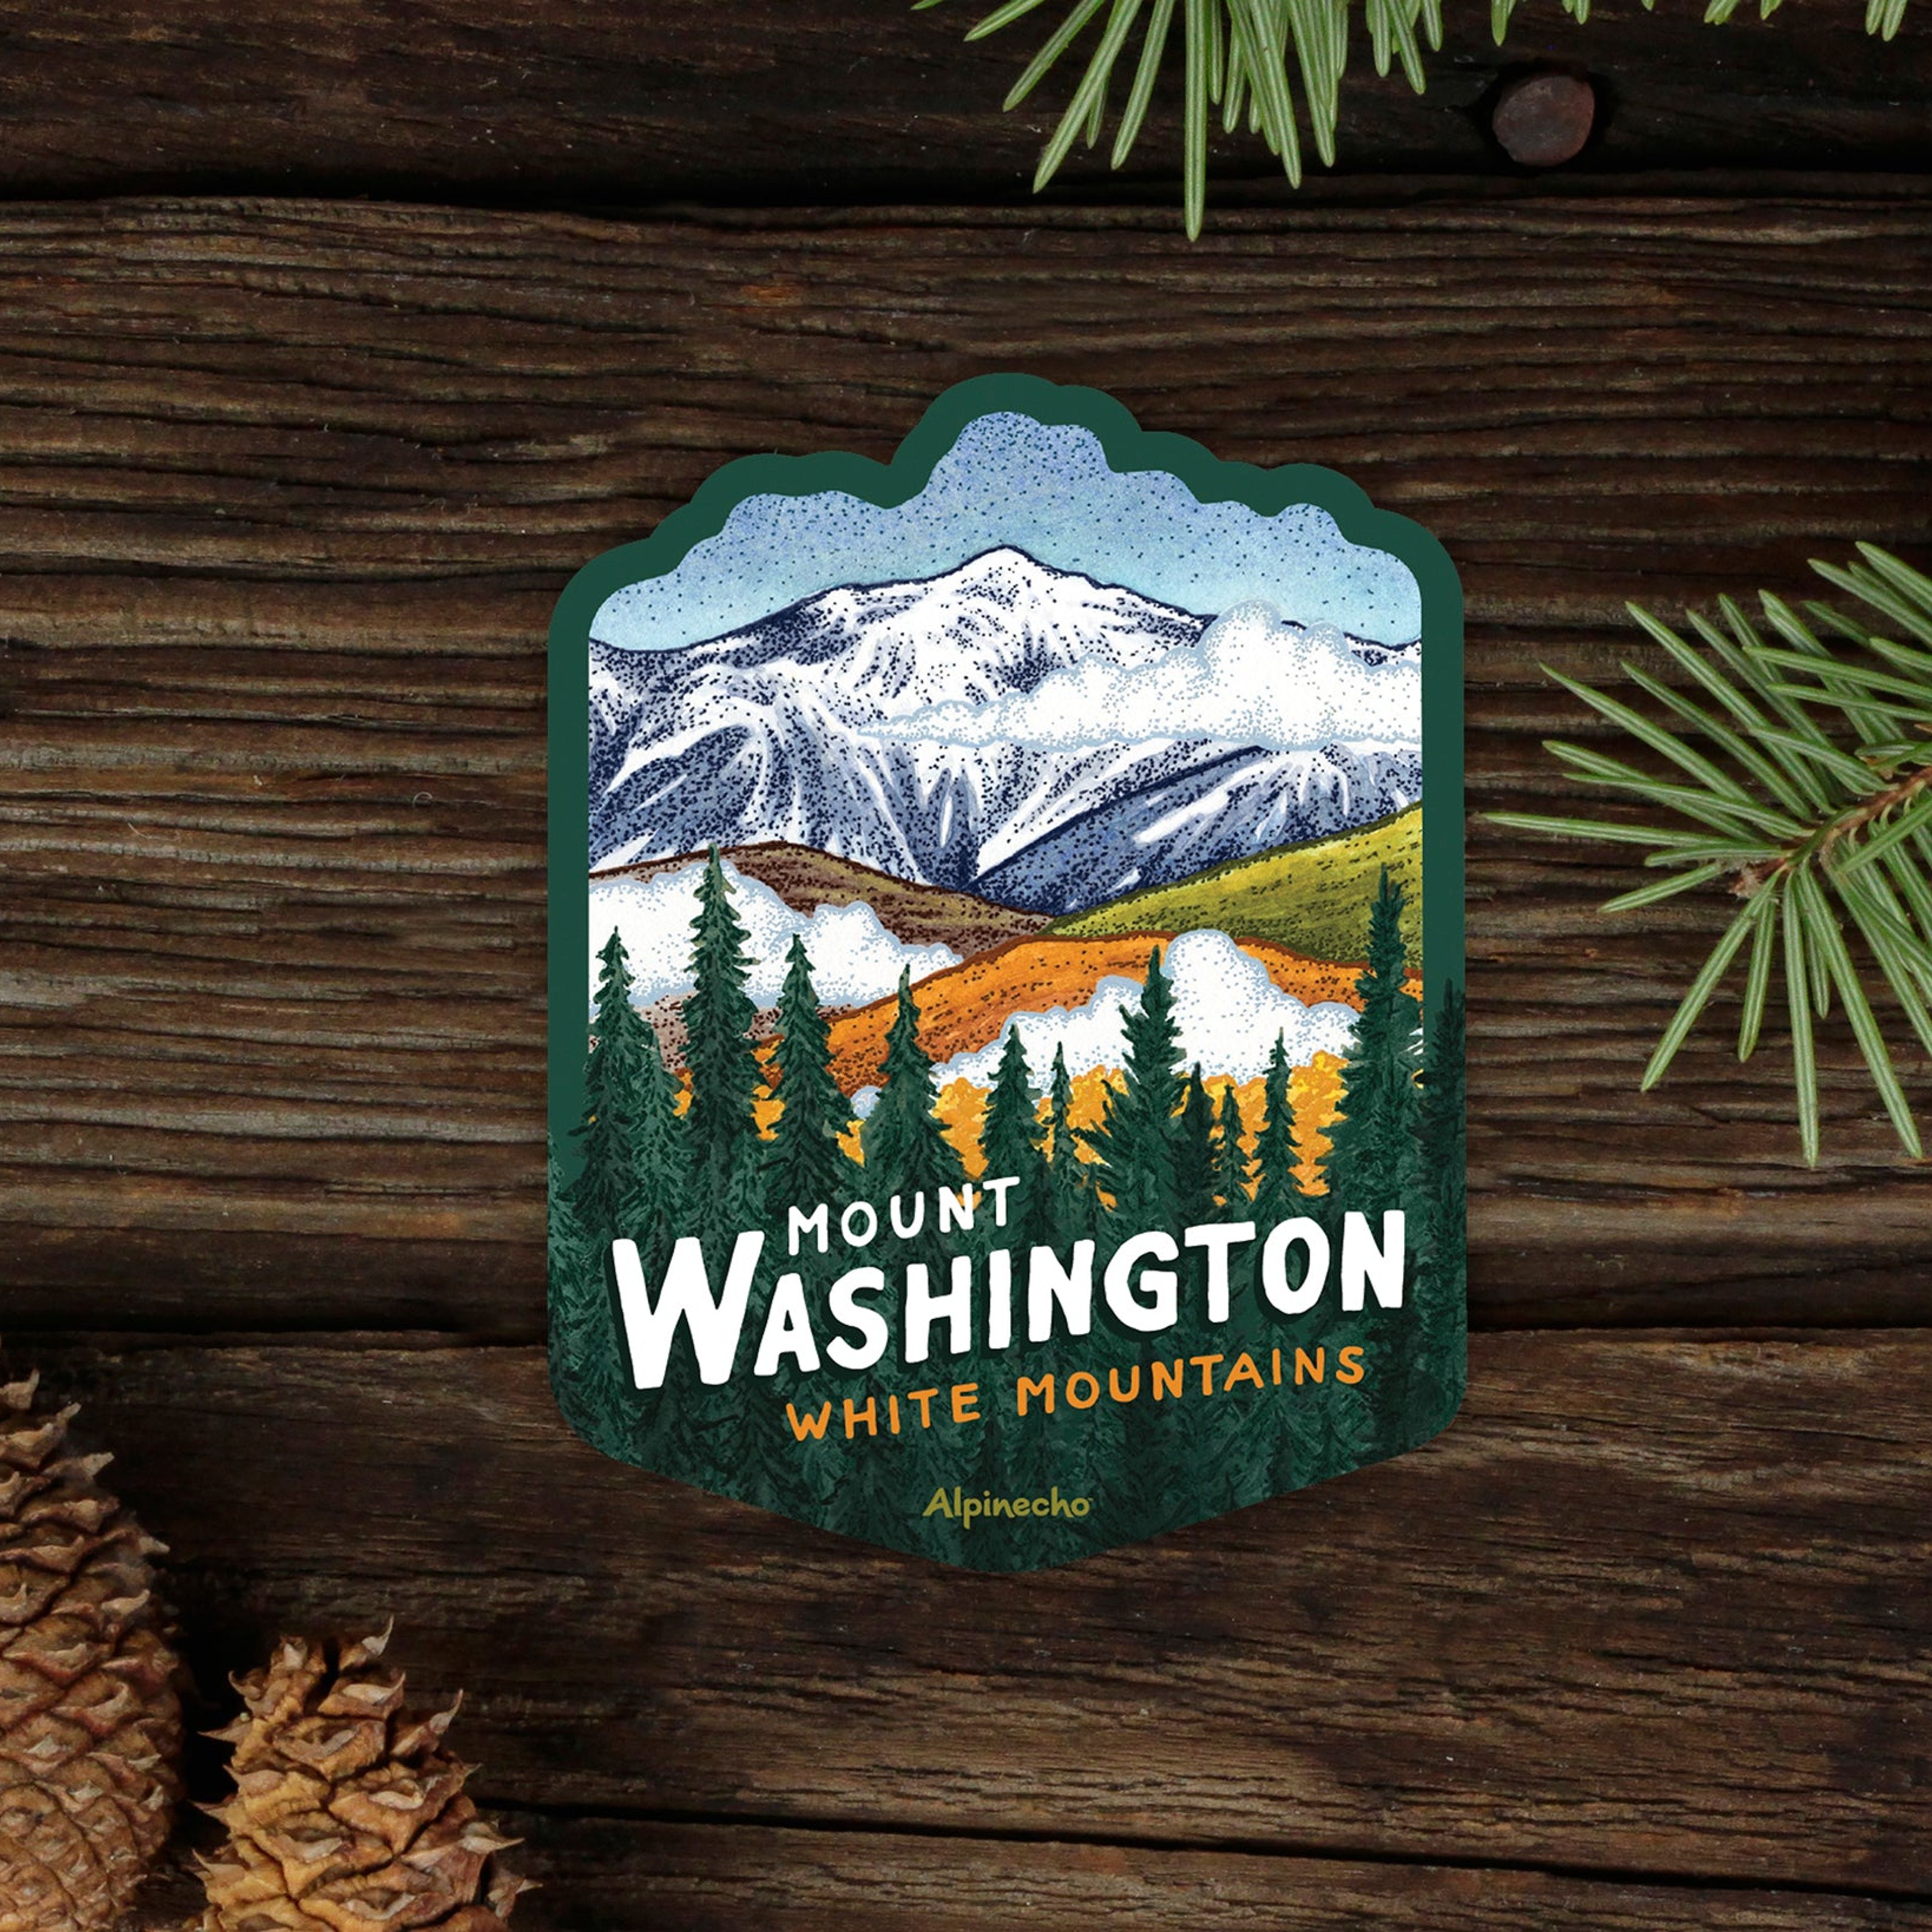 Mount Washington Sticker